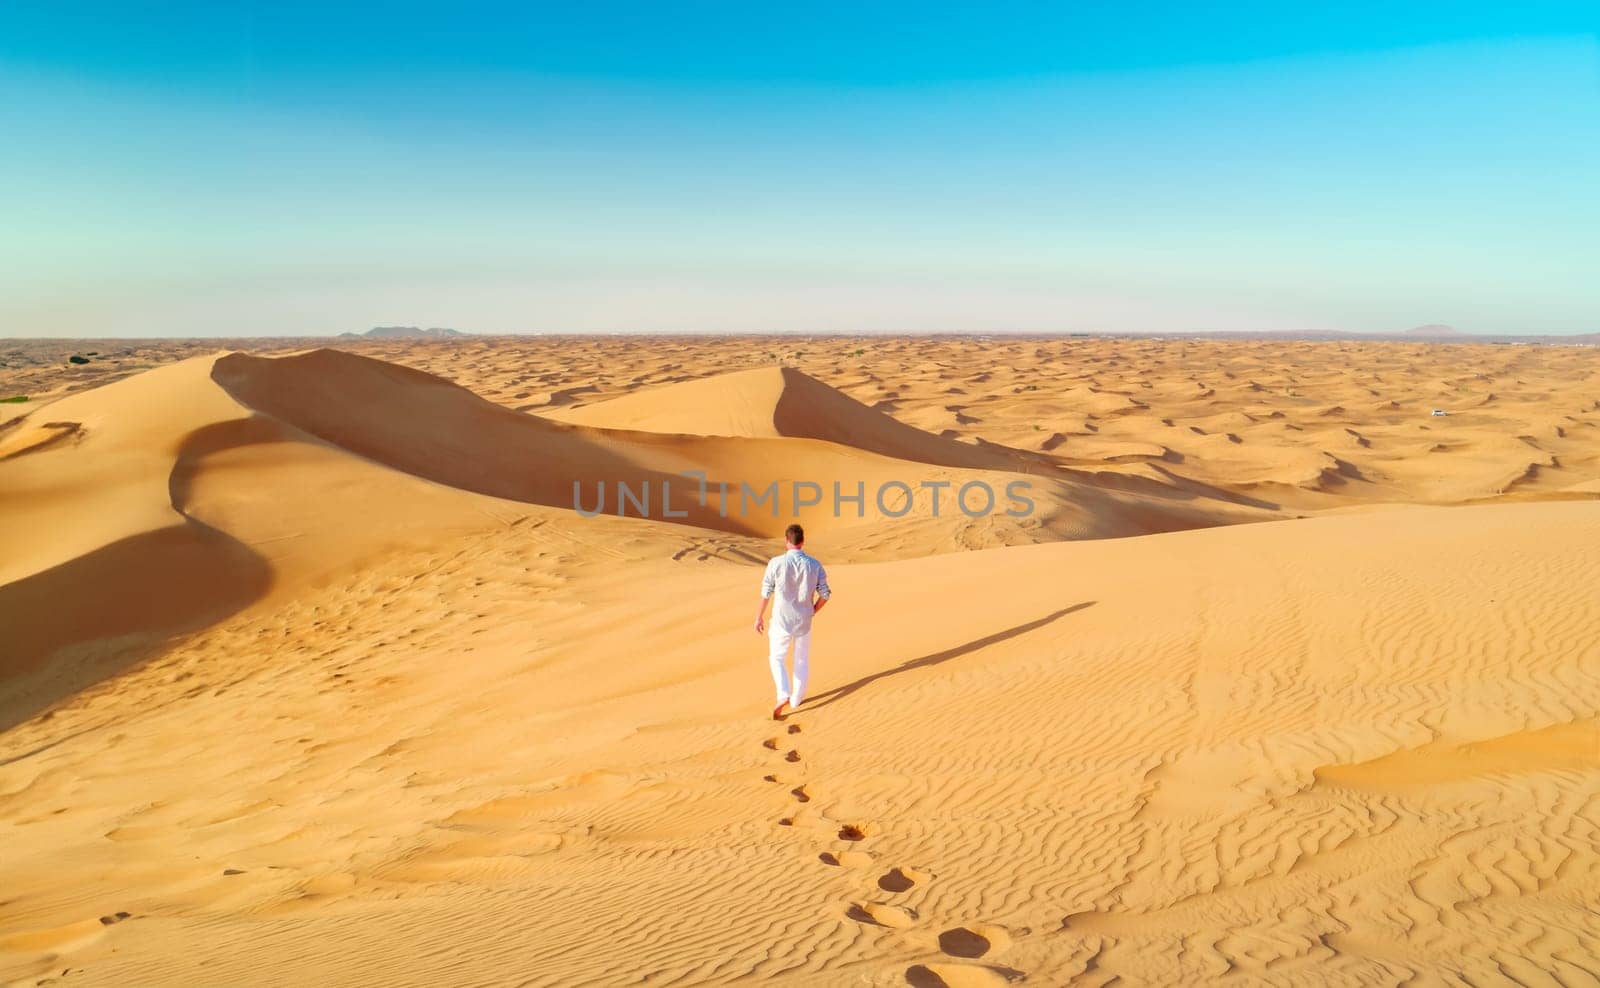 Dubai dessert sand dunes, menon Dubai desert safari,United Arab Emirates by fokkebok